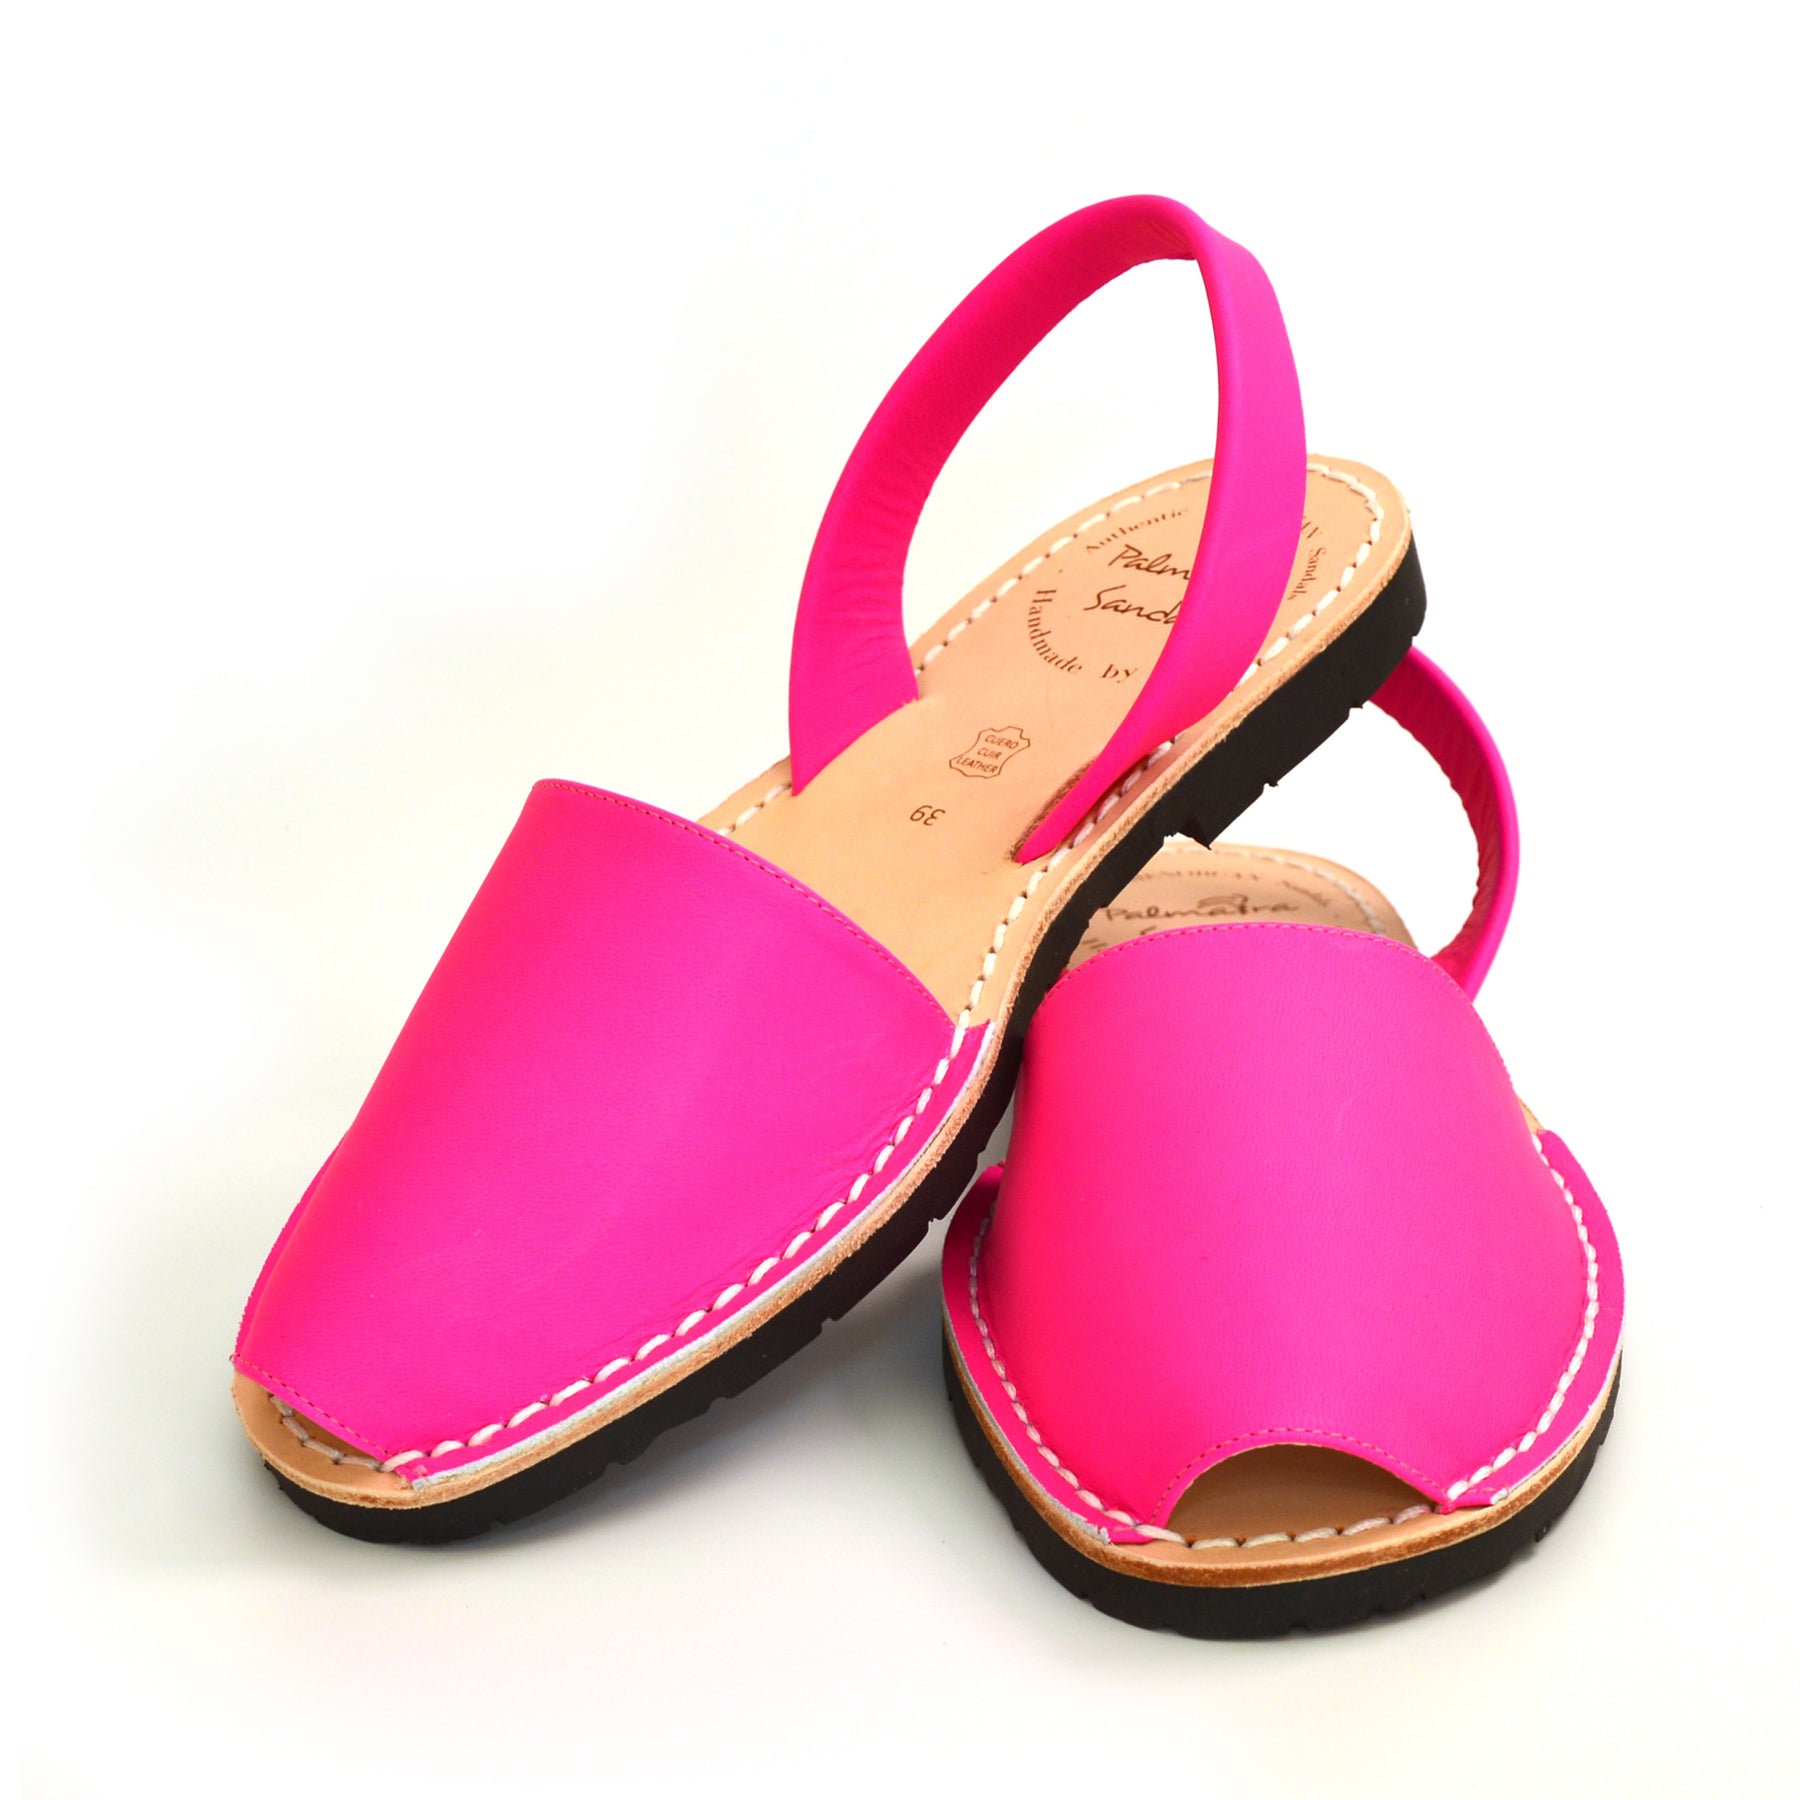 neon pink leather spanish menorcan avarcas sandals